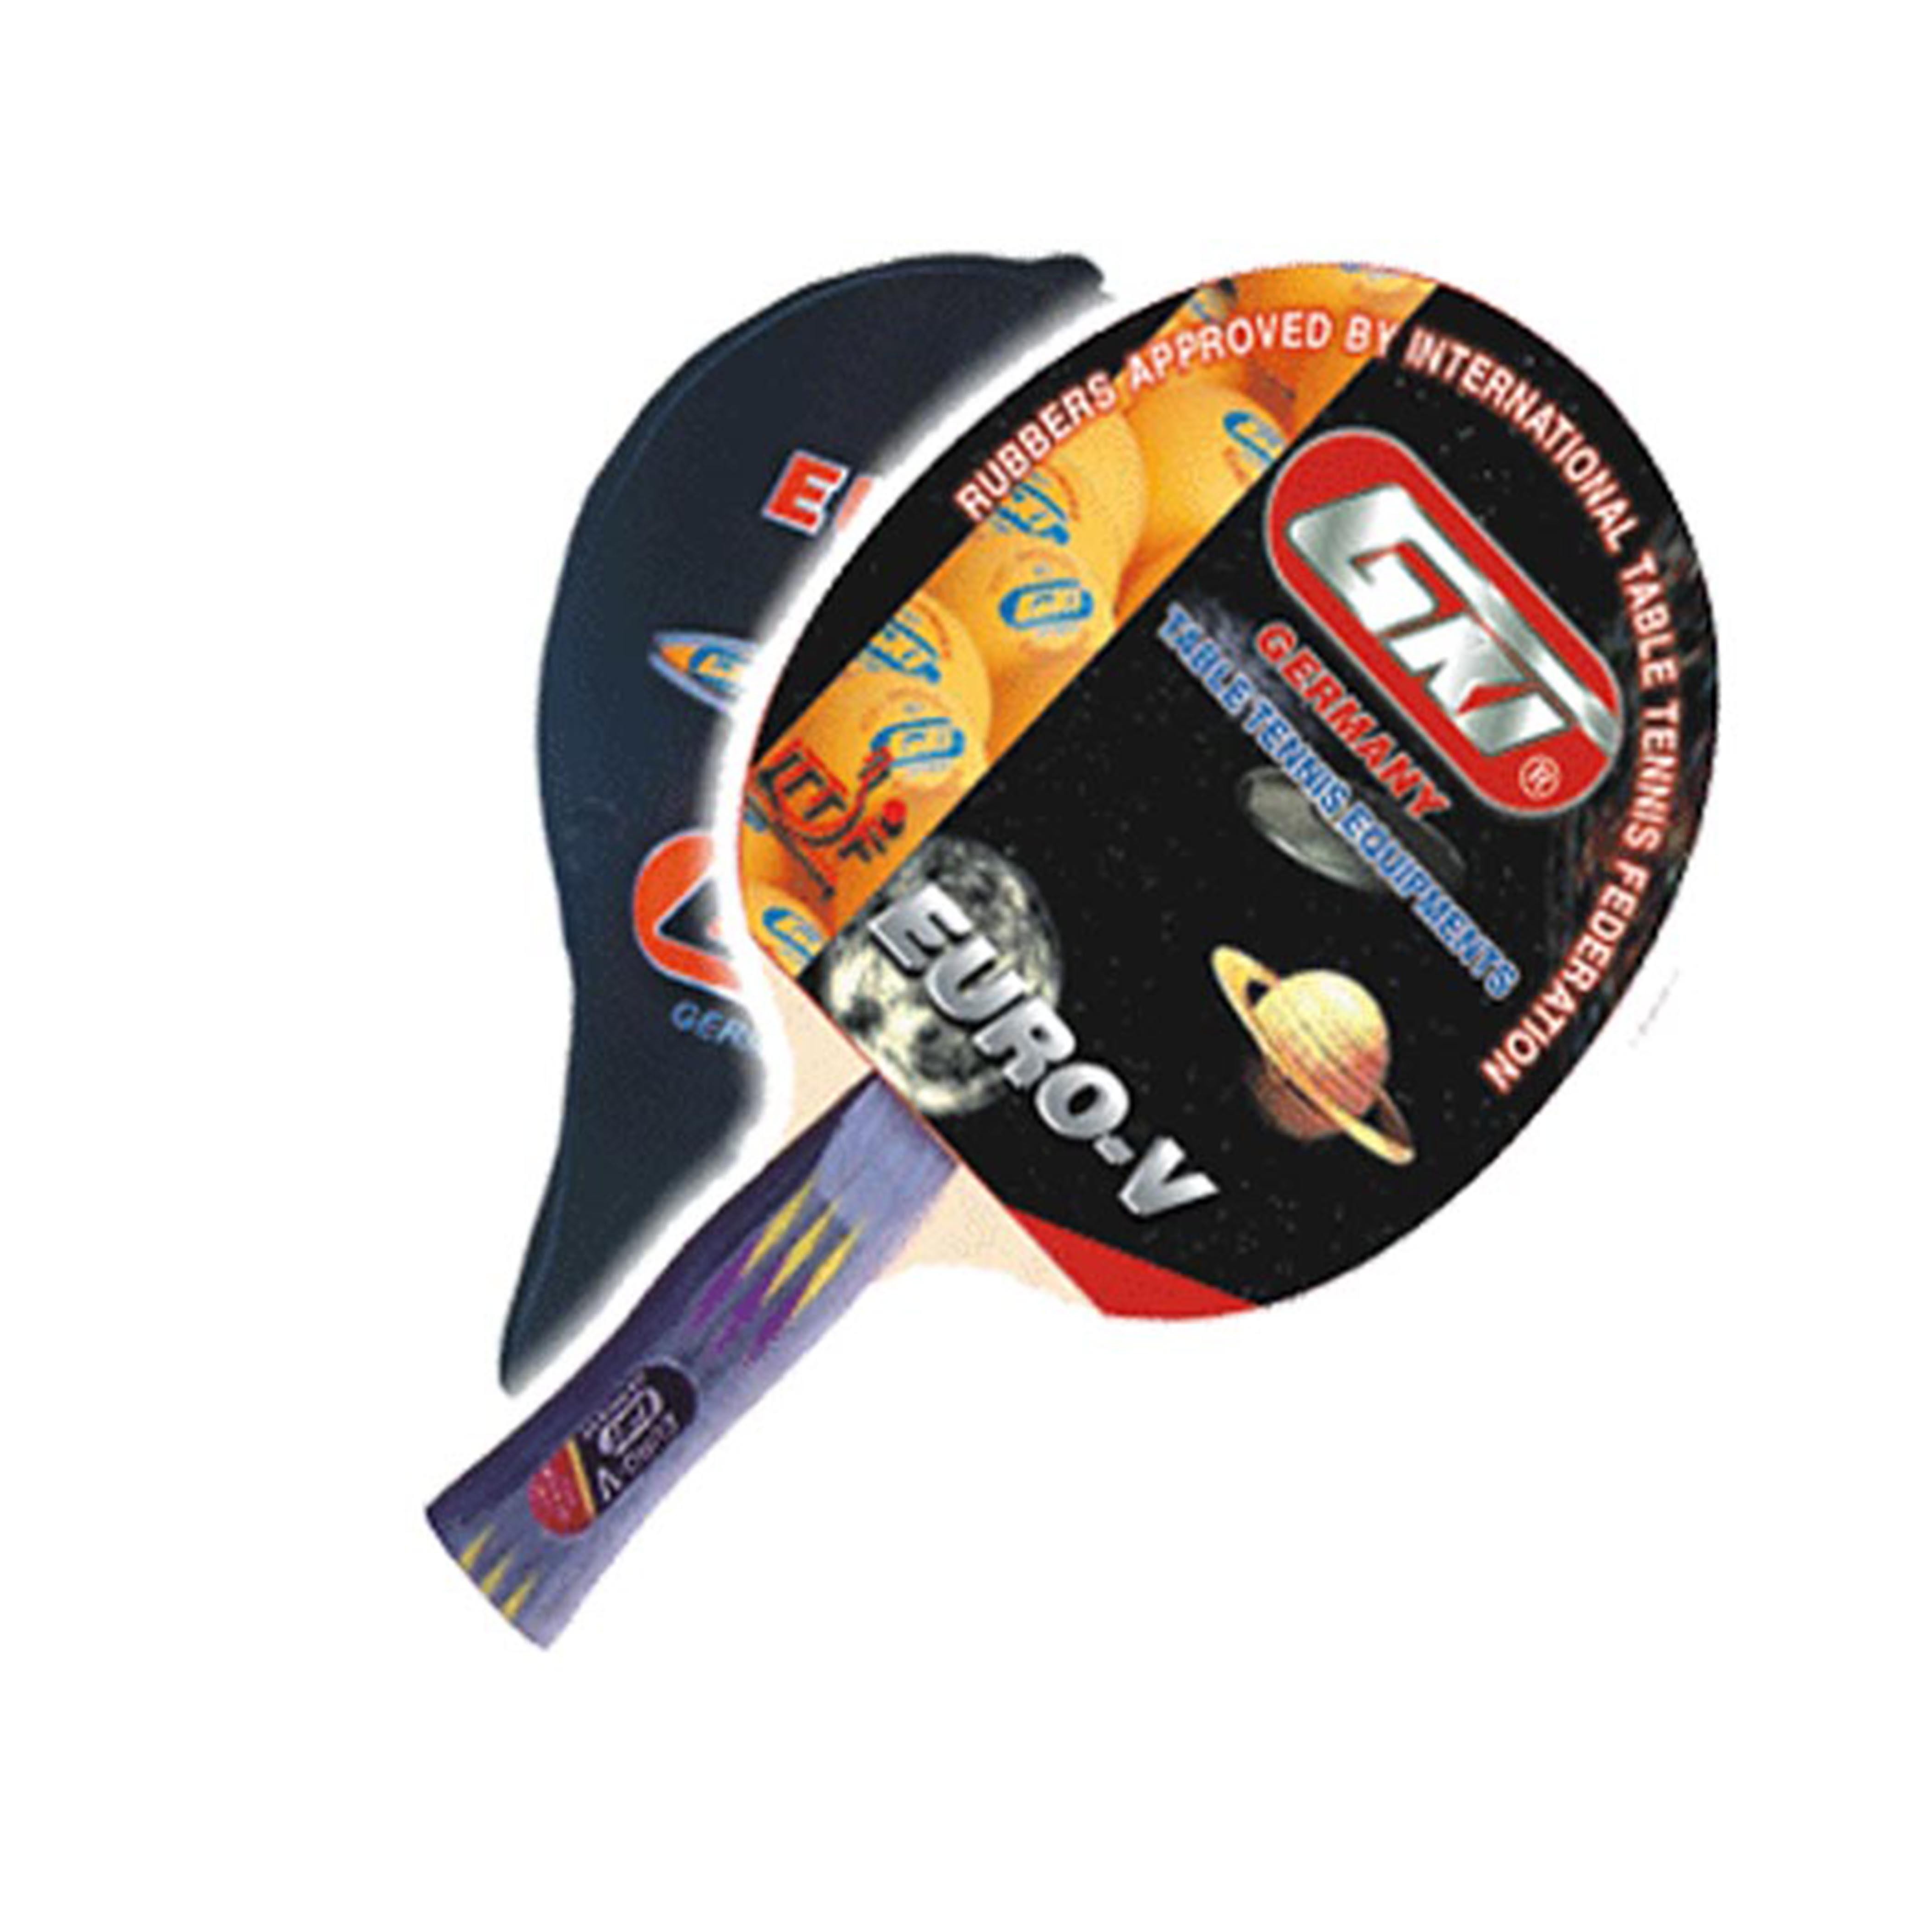 Khelkit Save 18% off on GKI Euro V Table Tennis Bat Online